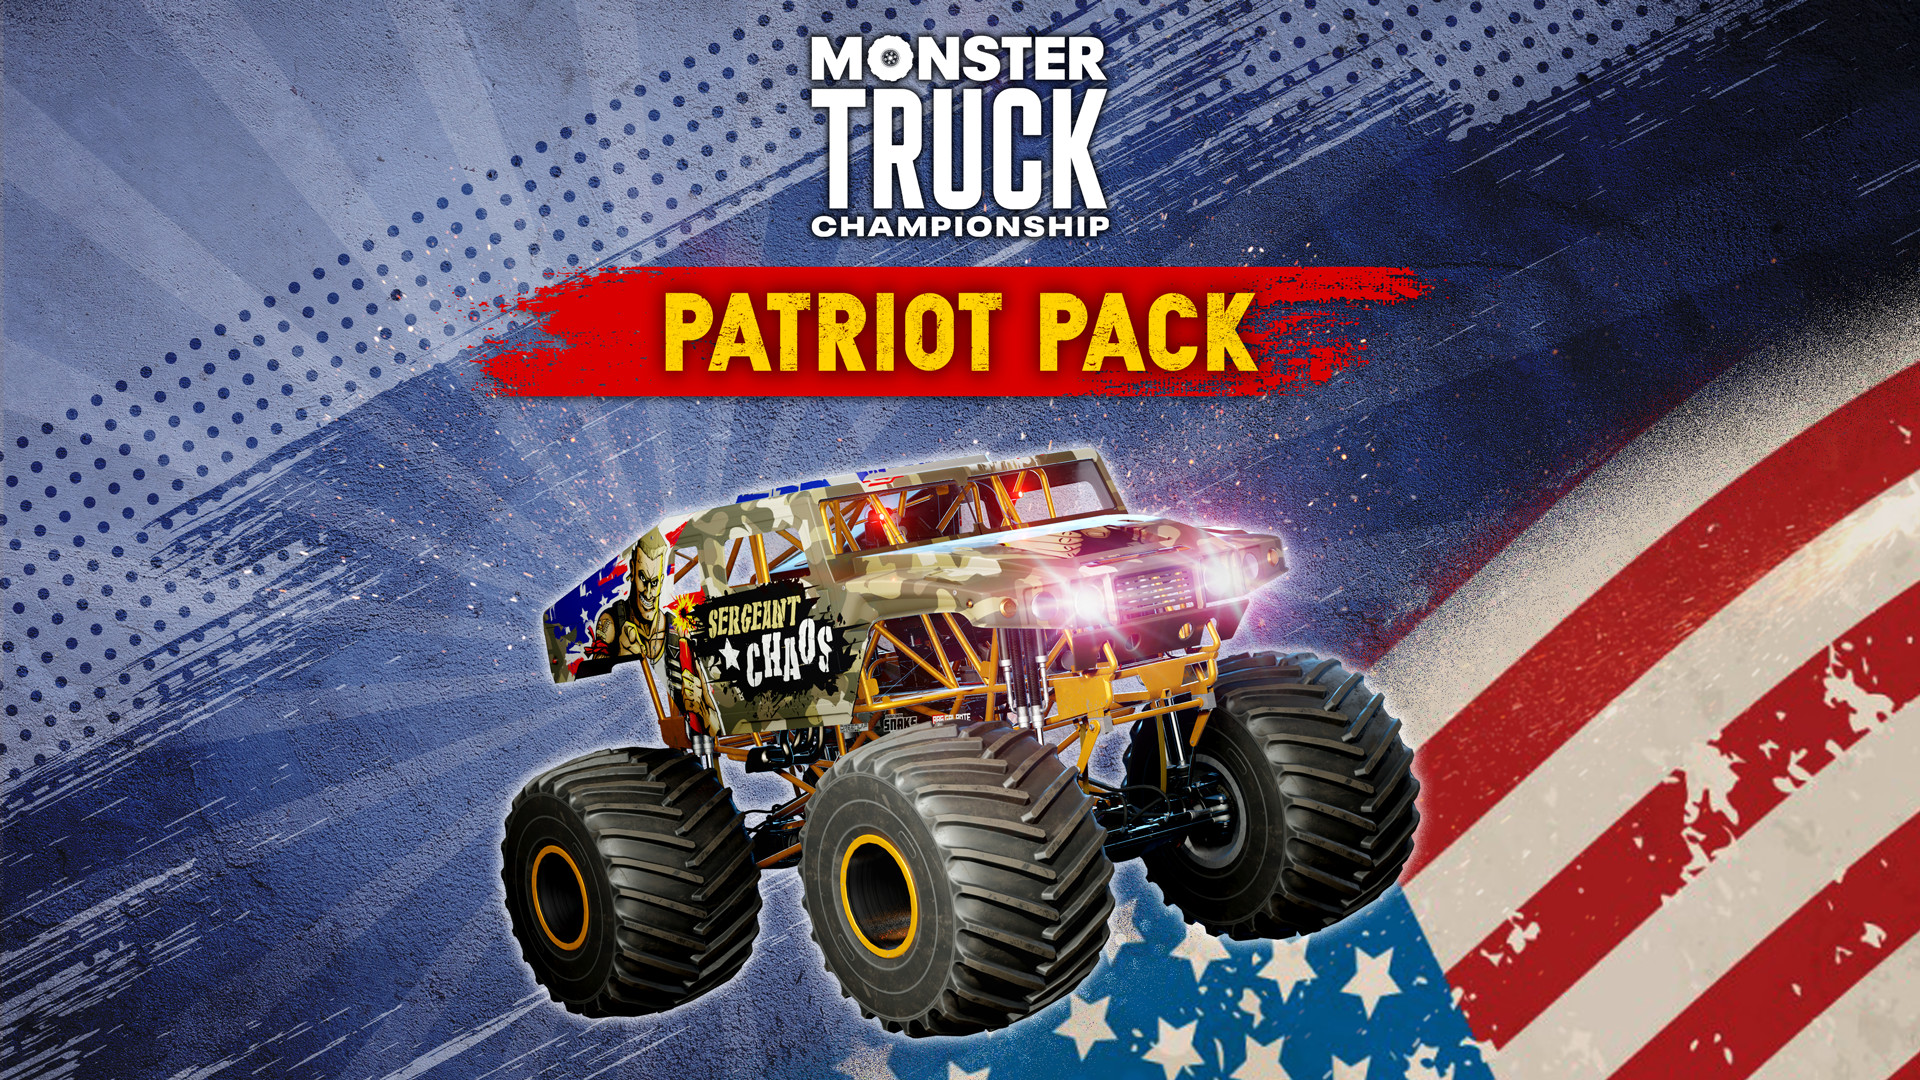 Monster Truck Championship - Patriot Pack DLC Steam CD Key, $3.21